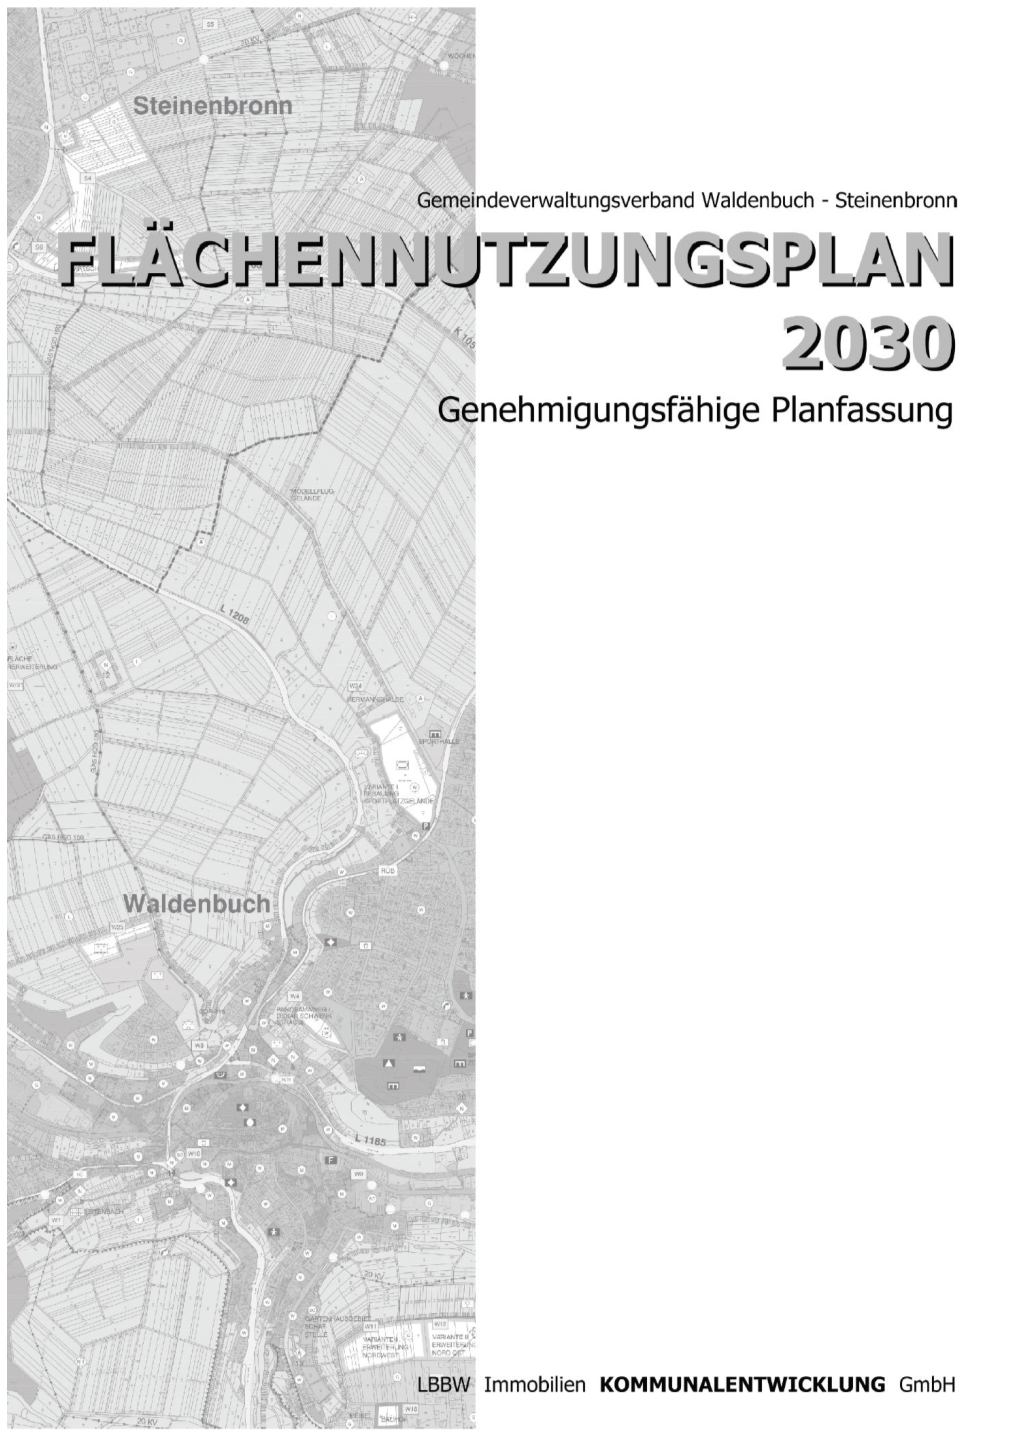 GVV Waldenbuch - Steinenbronn